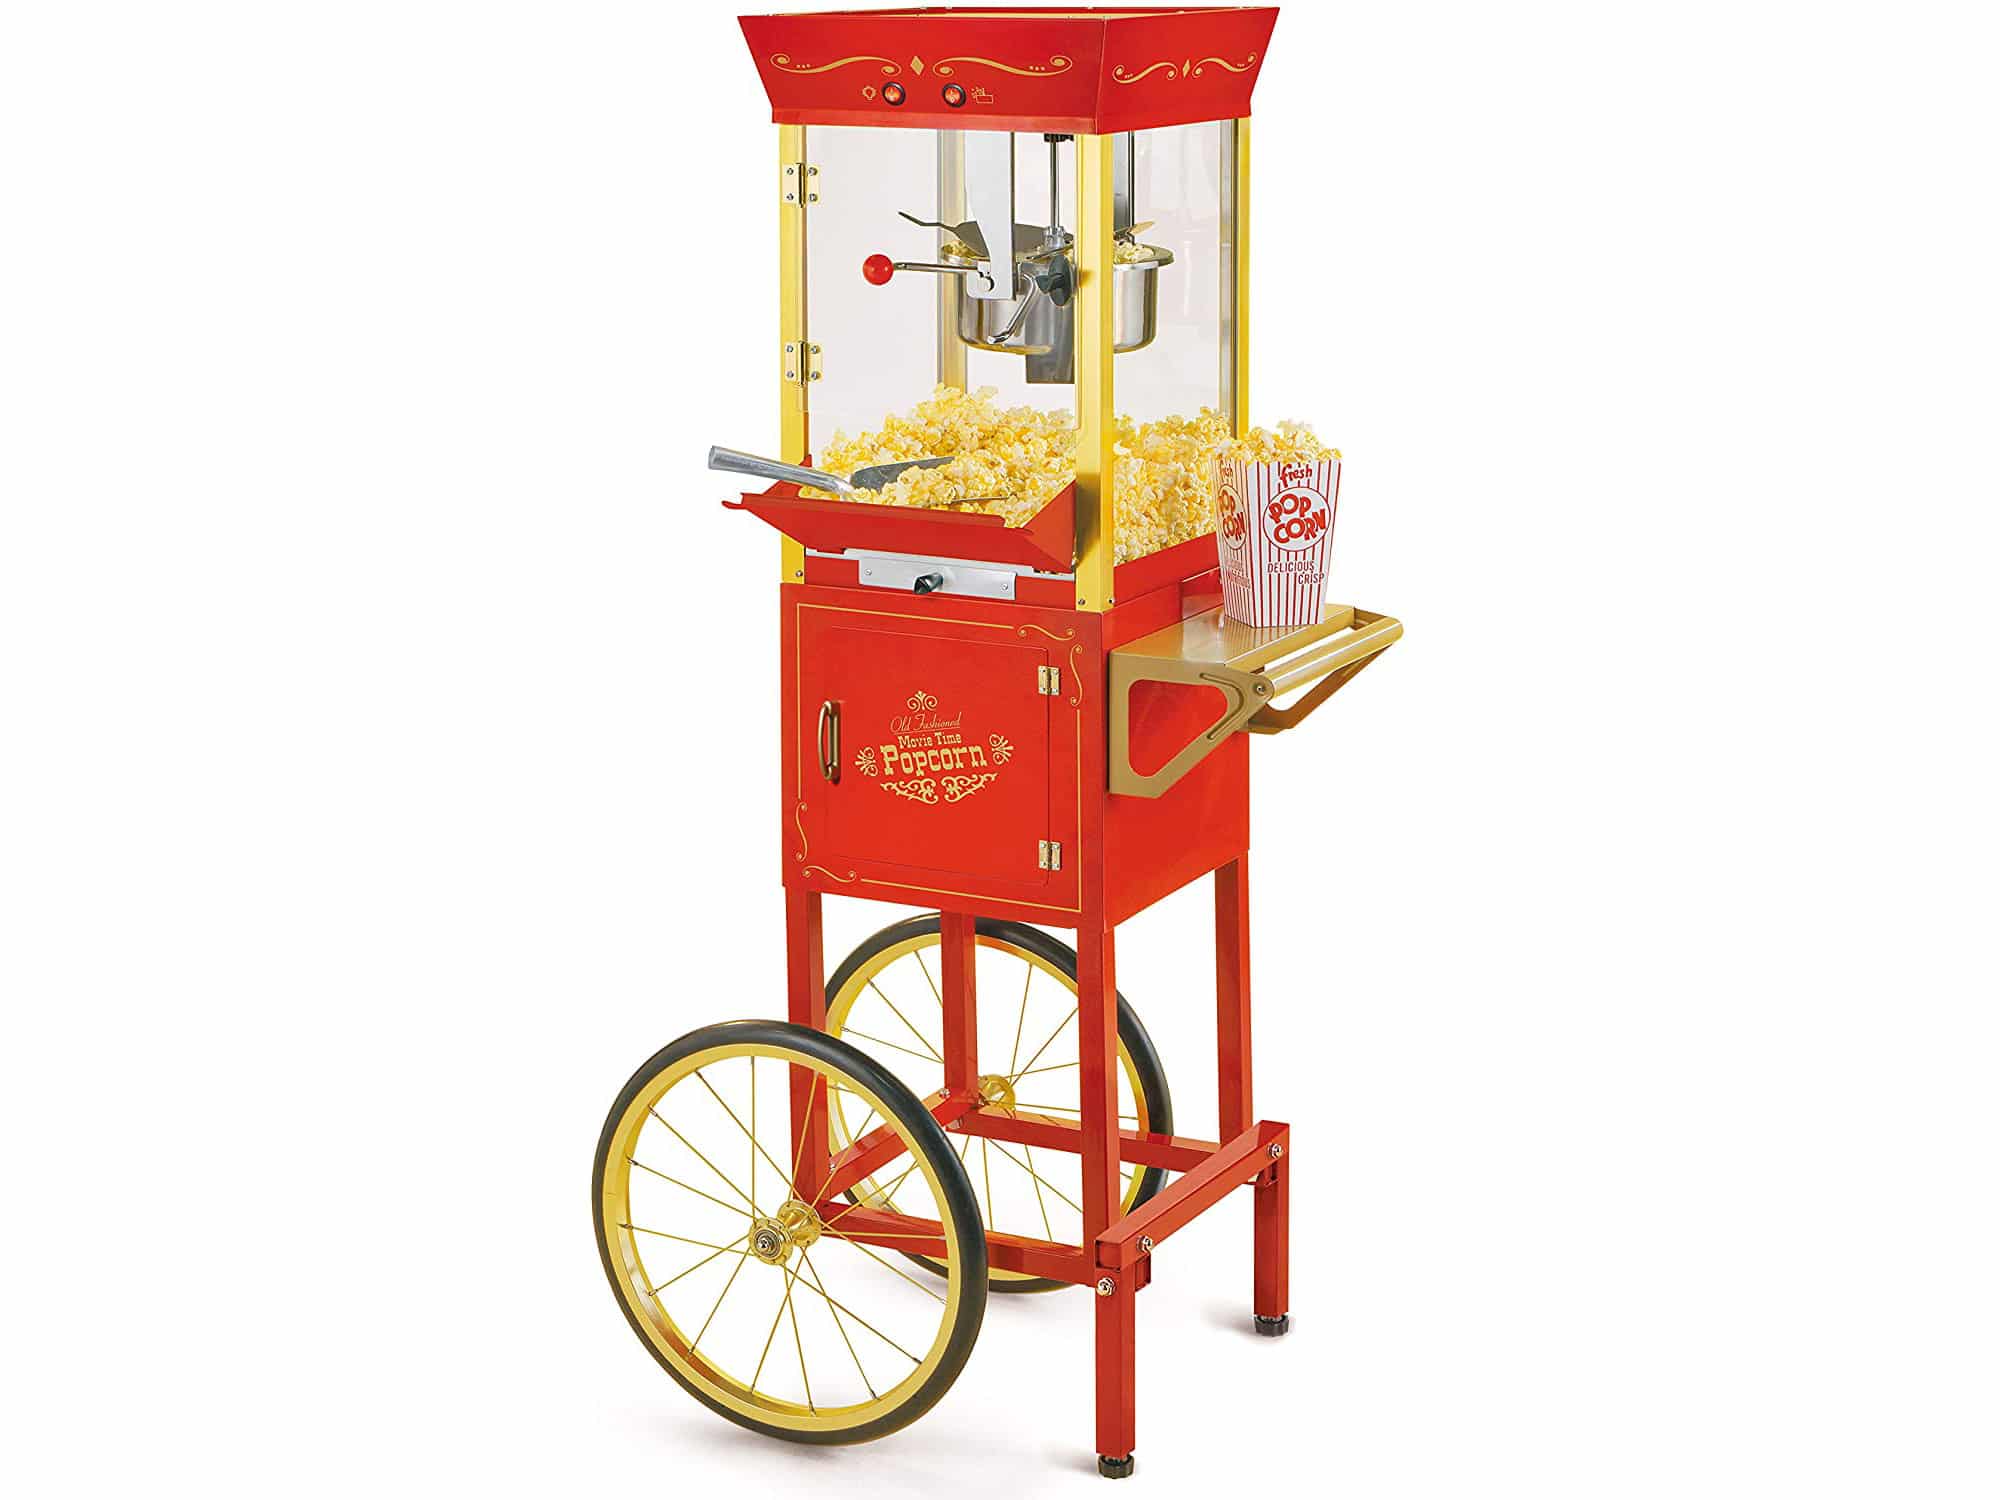 Nostalgia popcorn machine